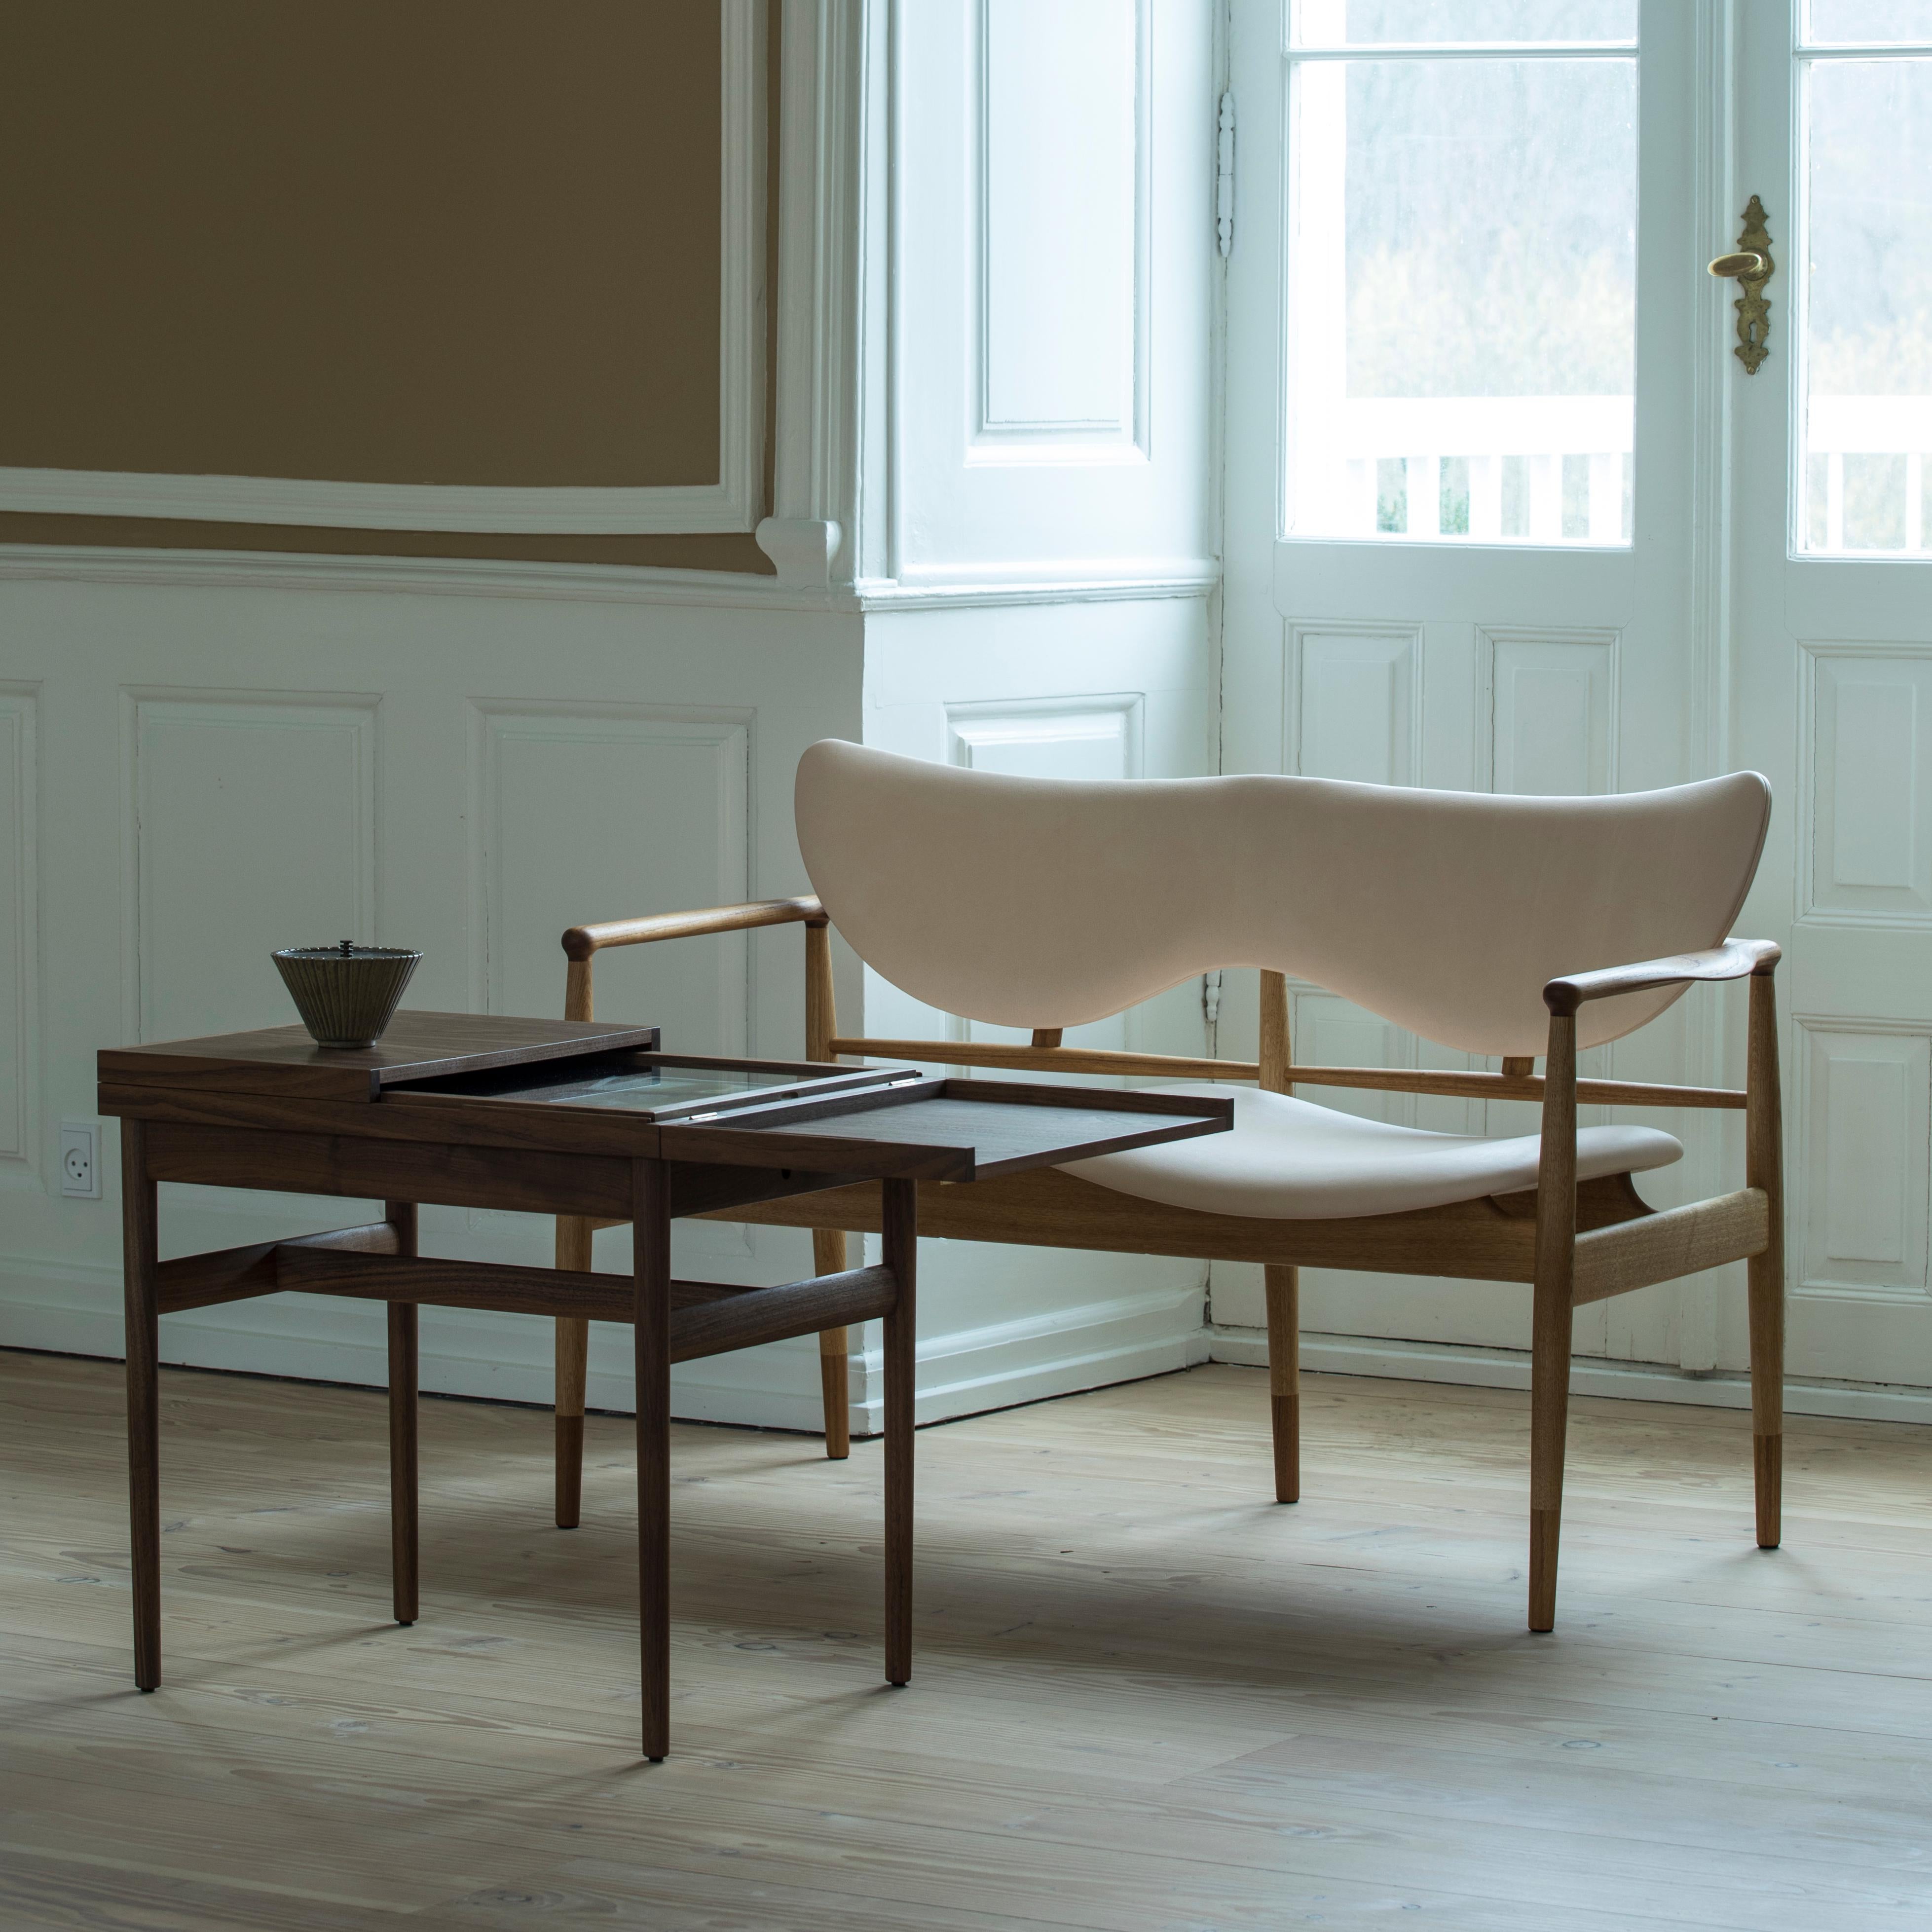 Finn Juhl 48 Sofa Bench Wood and Leather Iconic Danish Modern Design 9